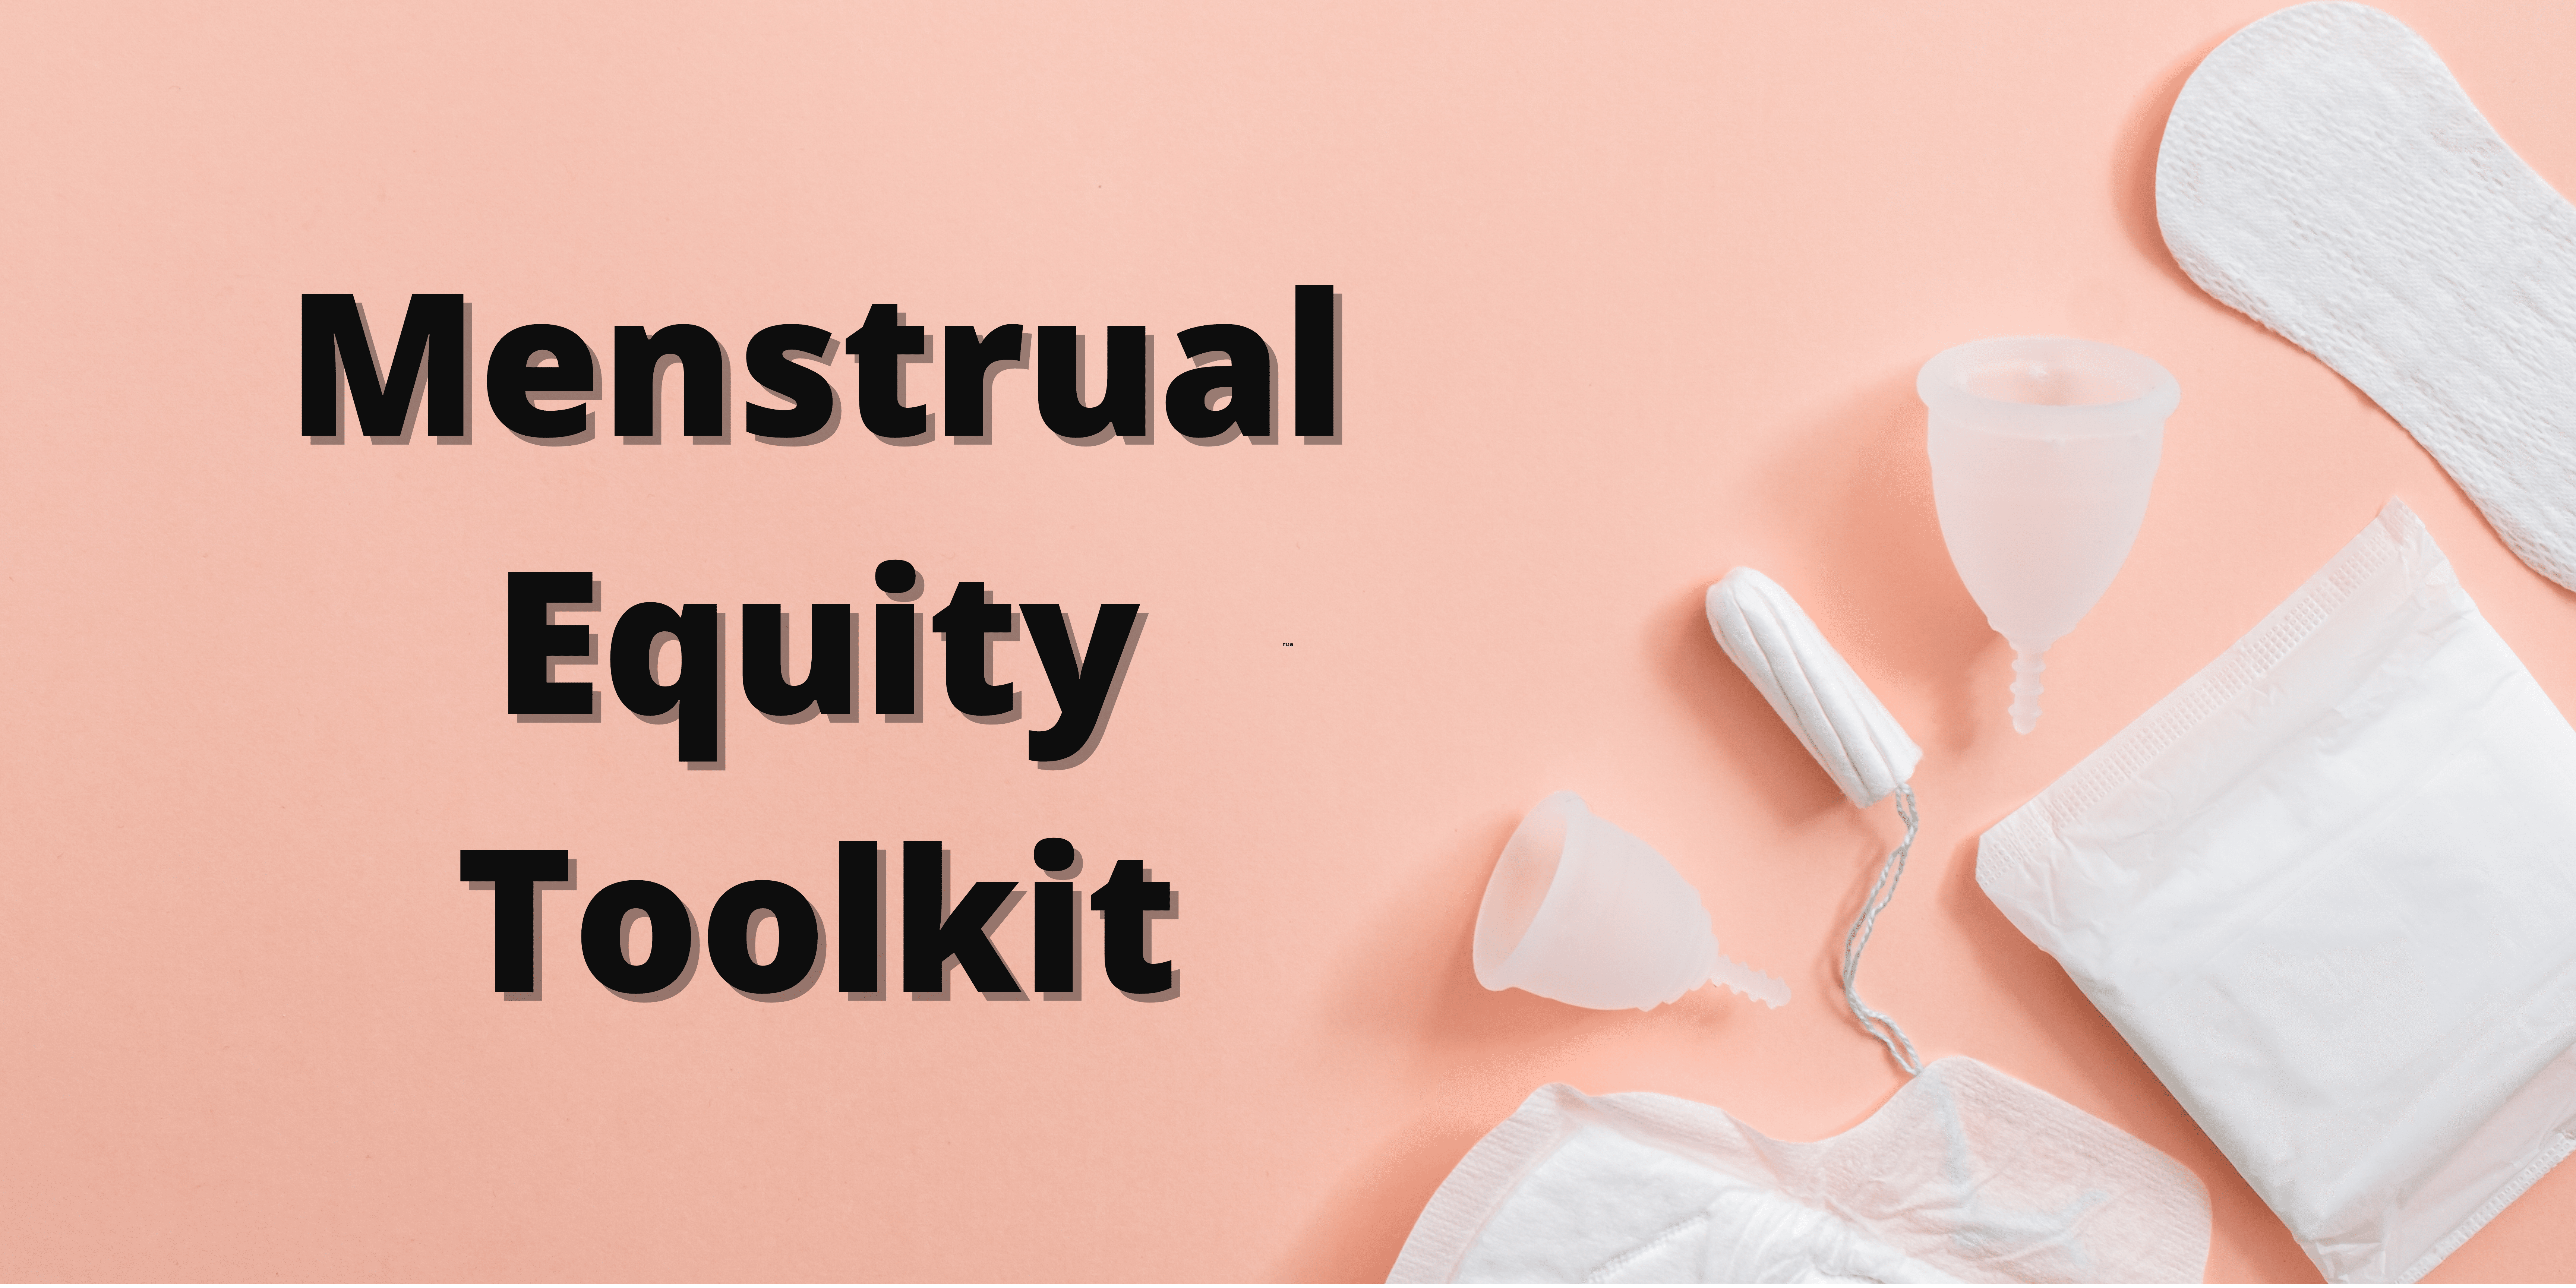 Menstrual Equity Toolkit